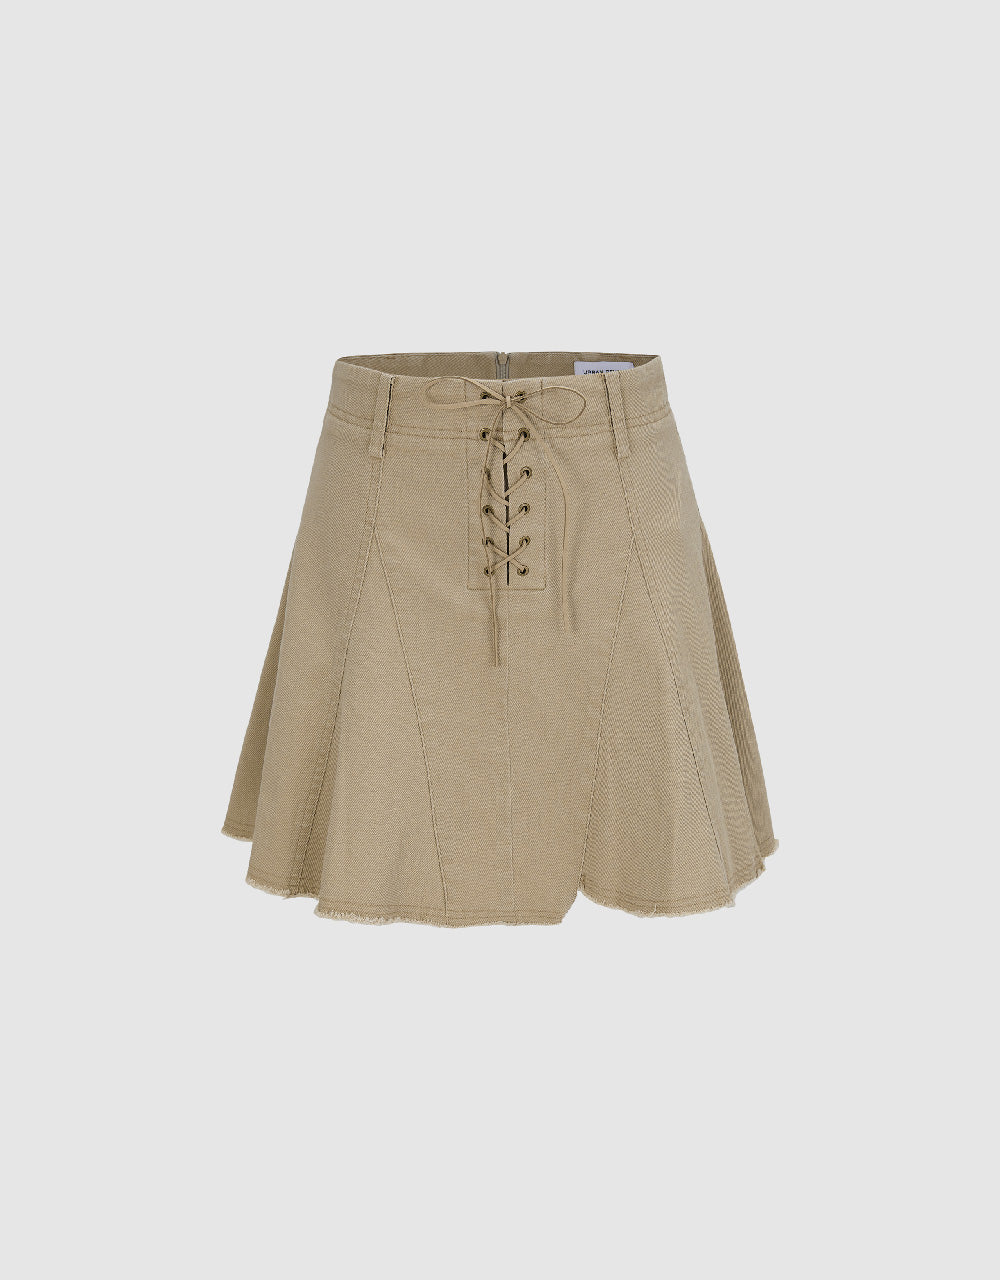 Raw Hem A-Line Skirt